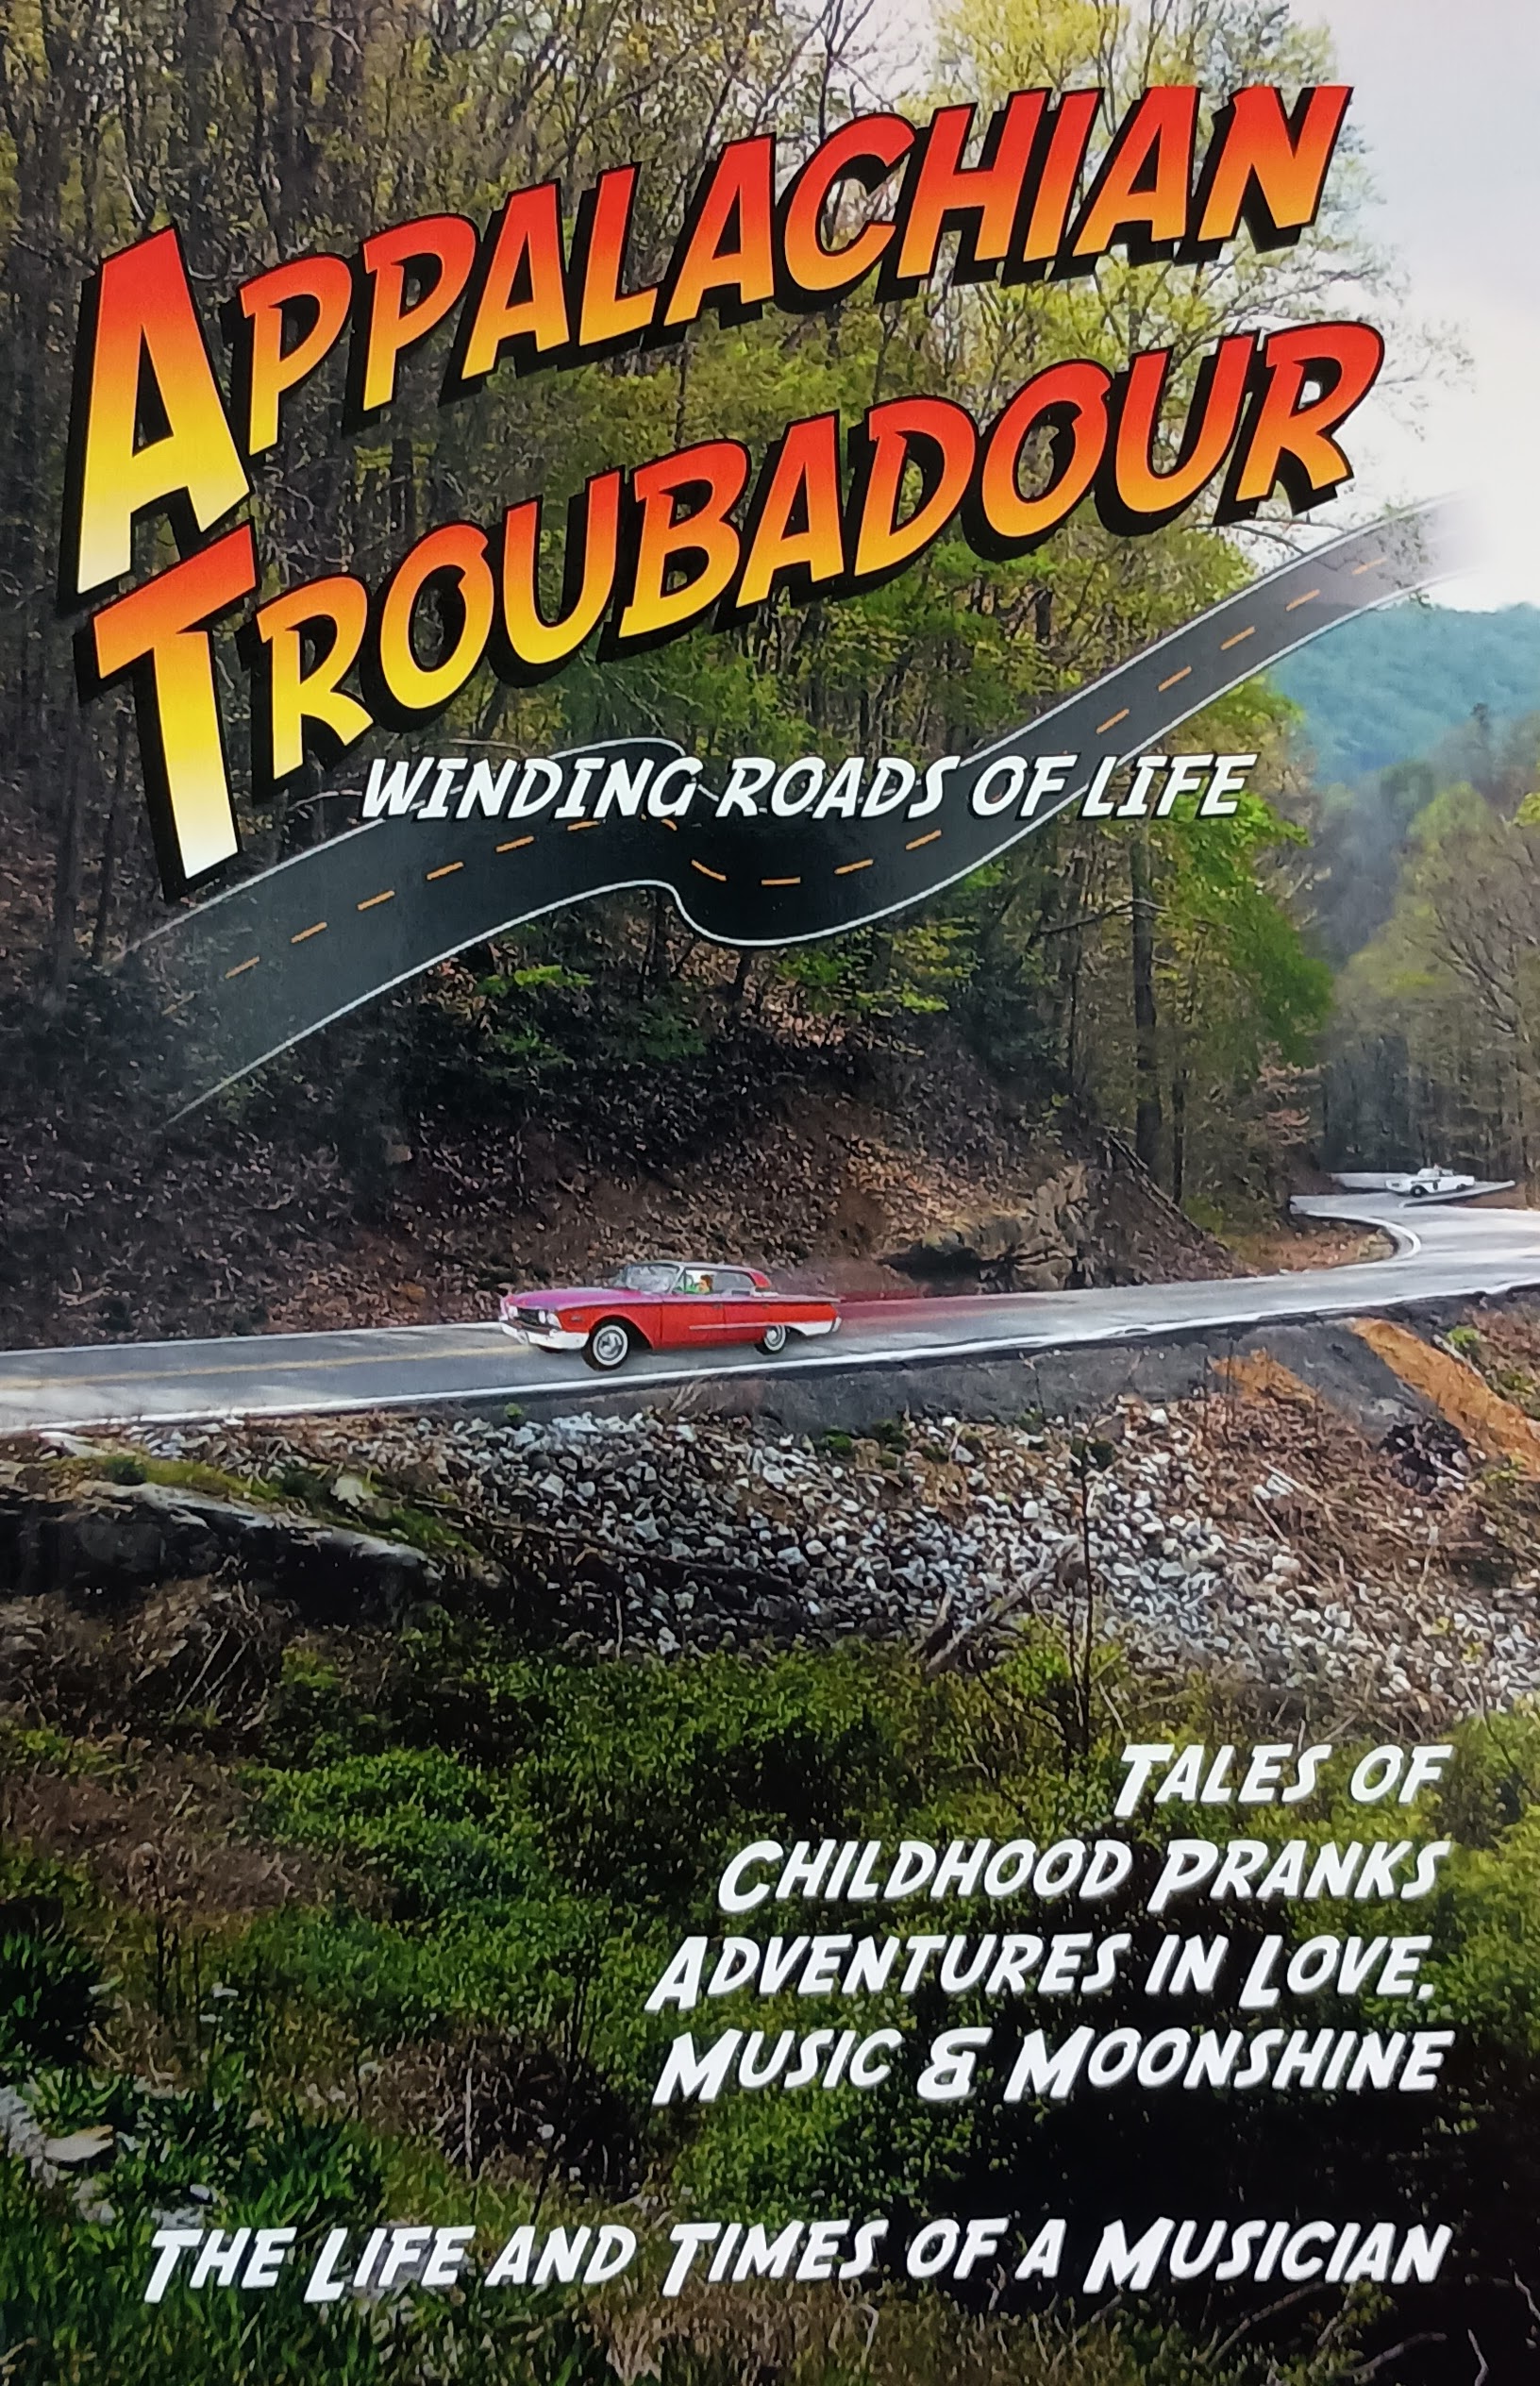 "Appalachian Troubadour" Book